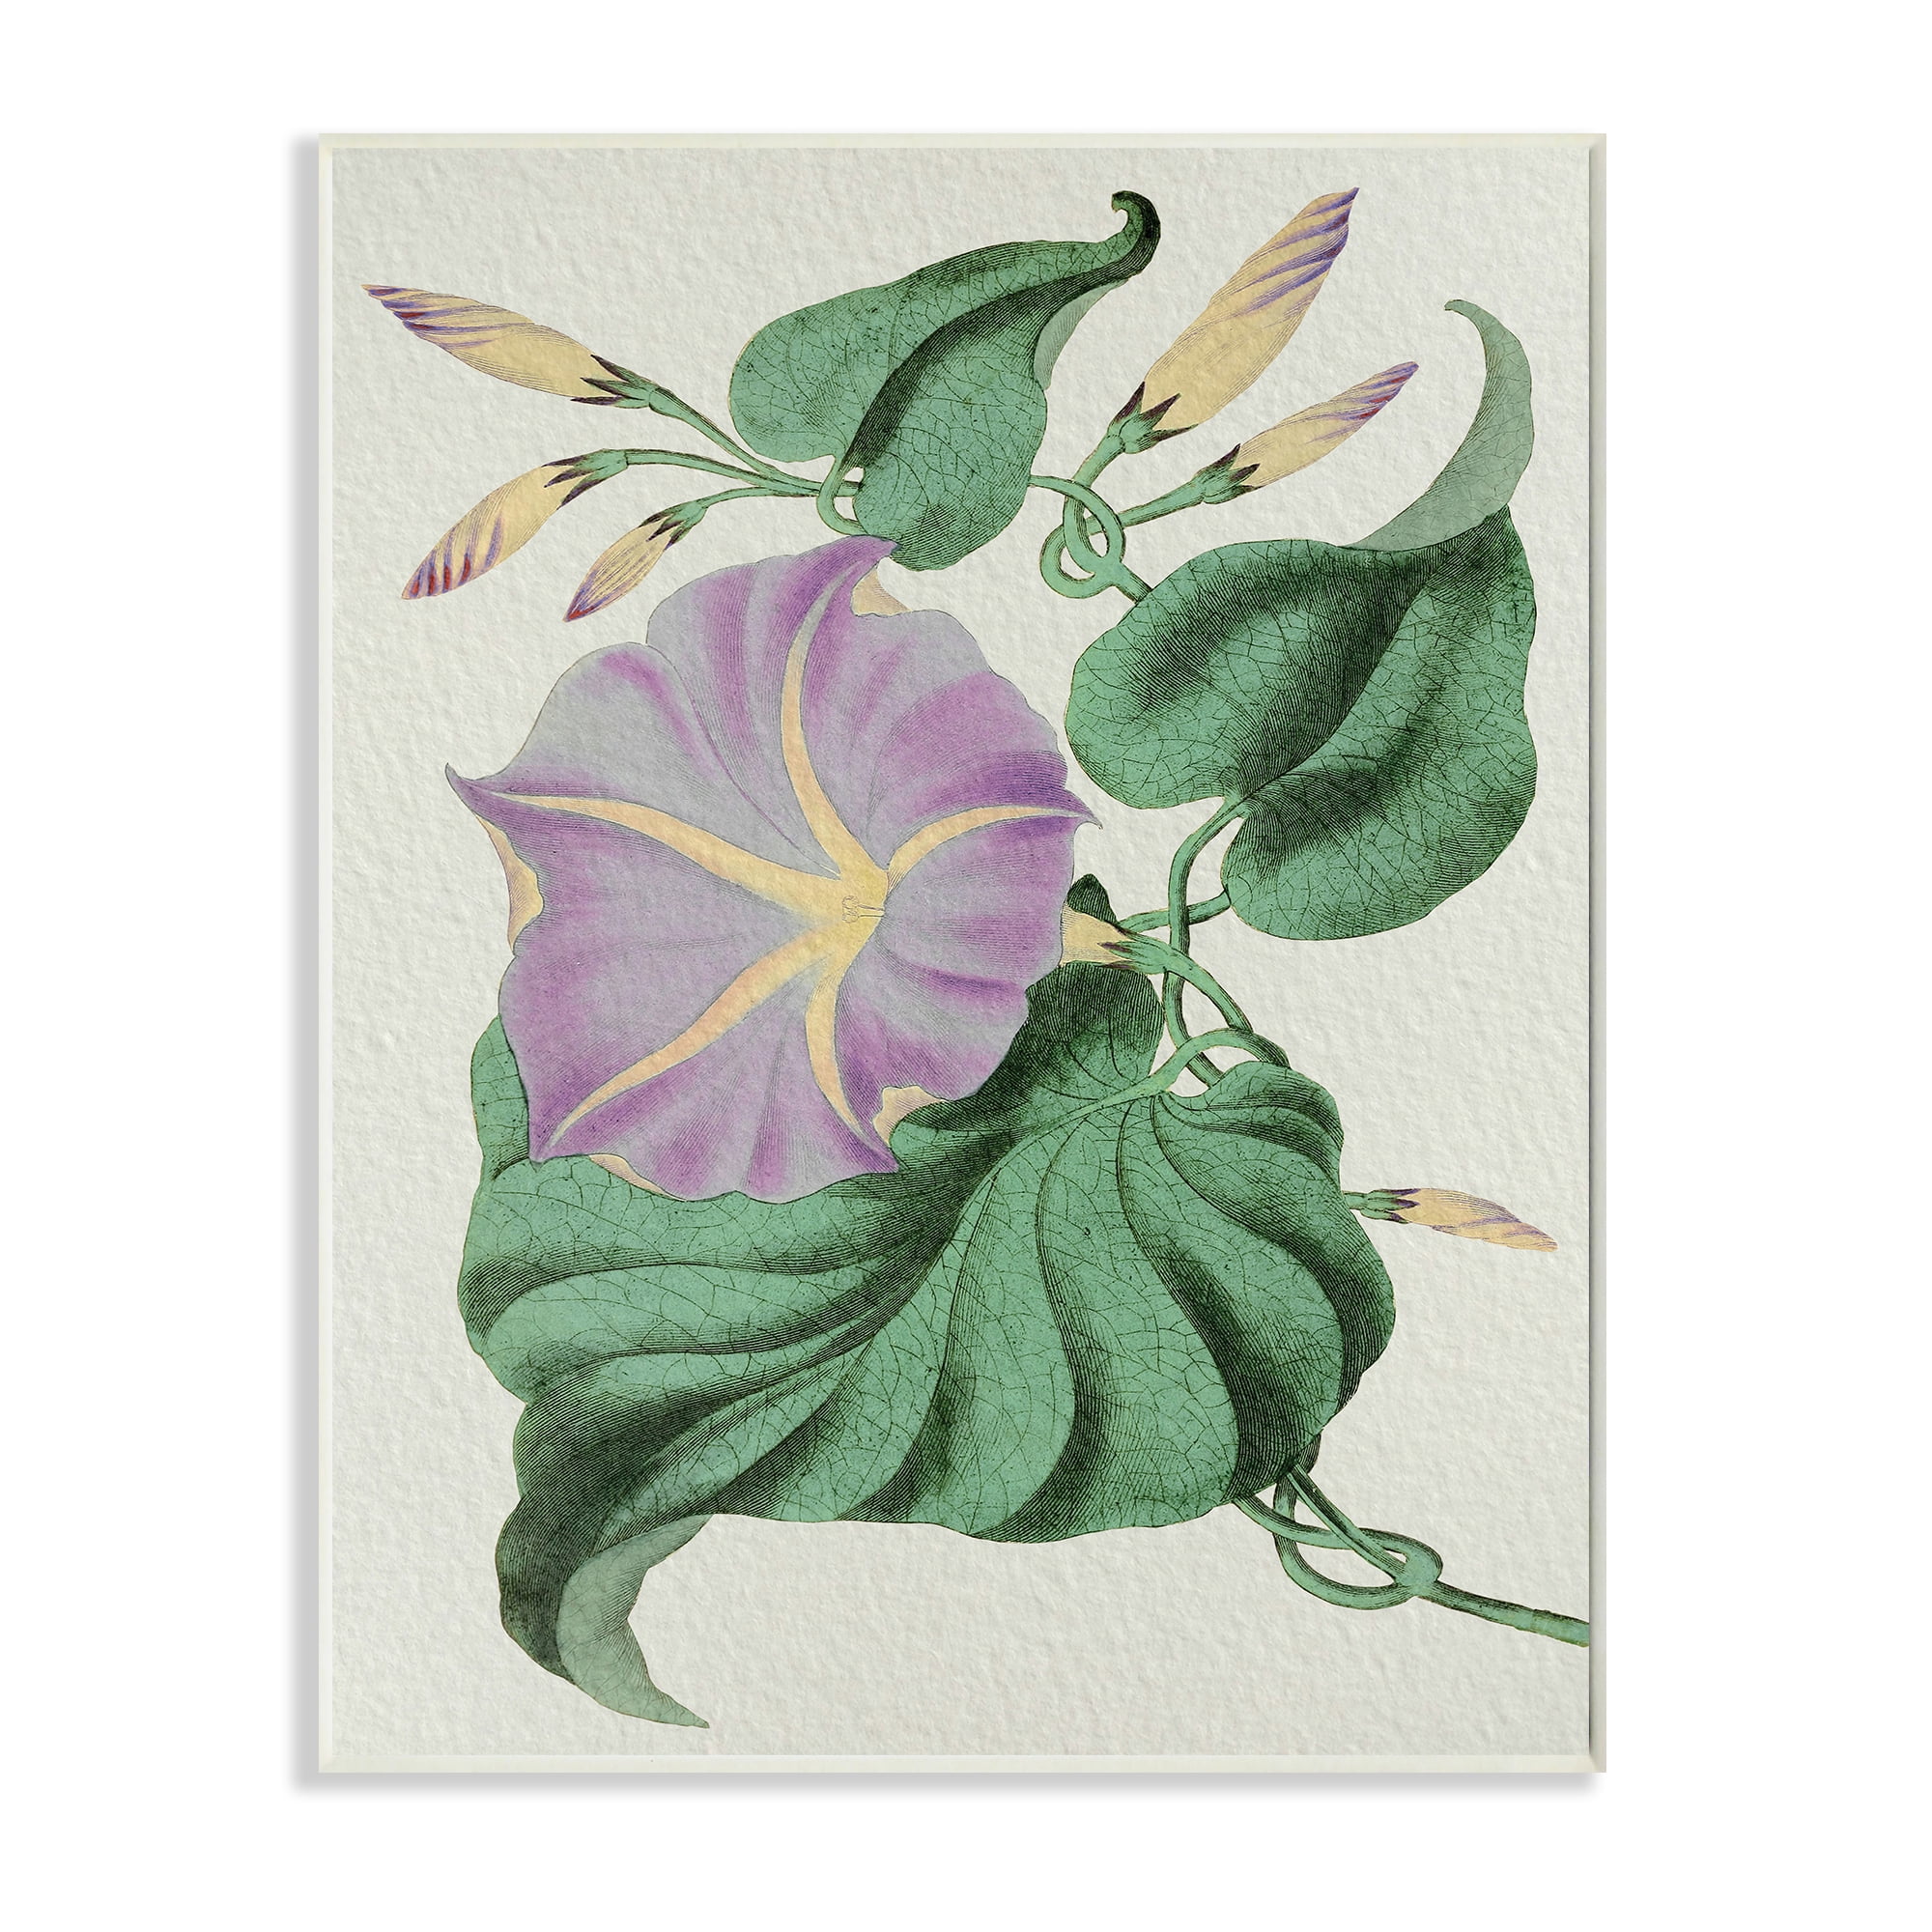 Floral Art Print Morning–glory Vintage Botanical Poster Print Flower Study